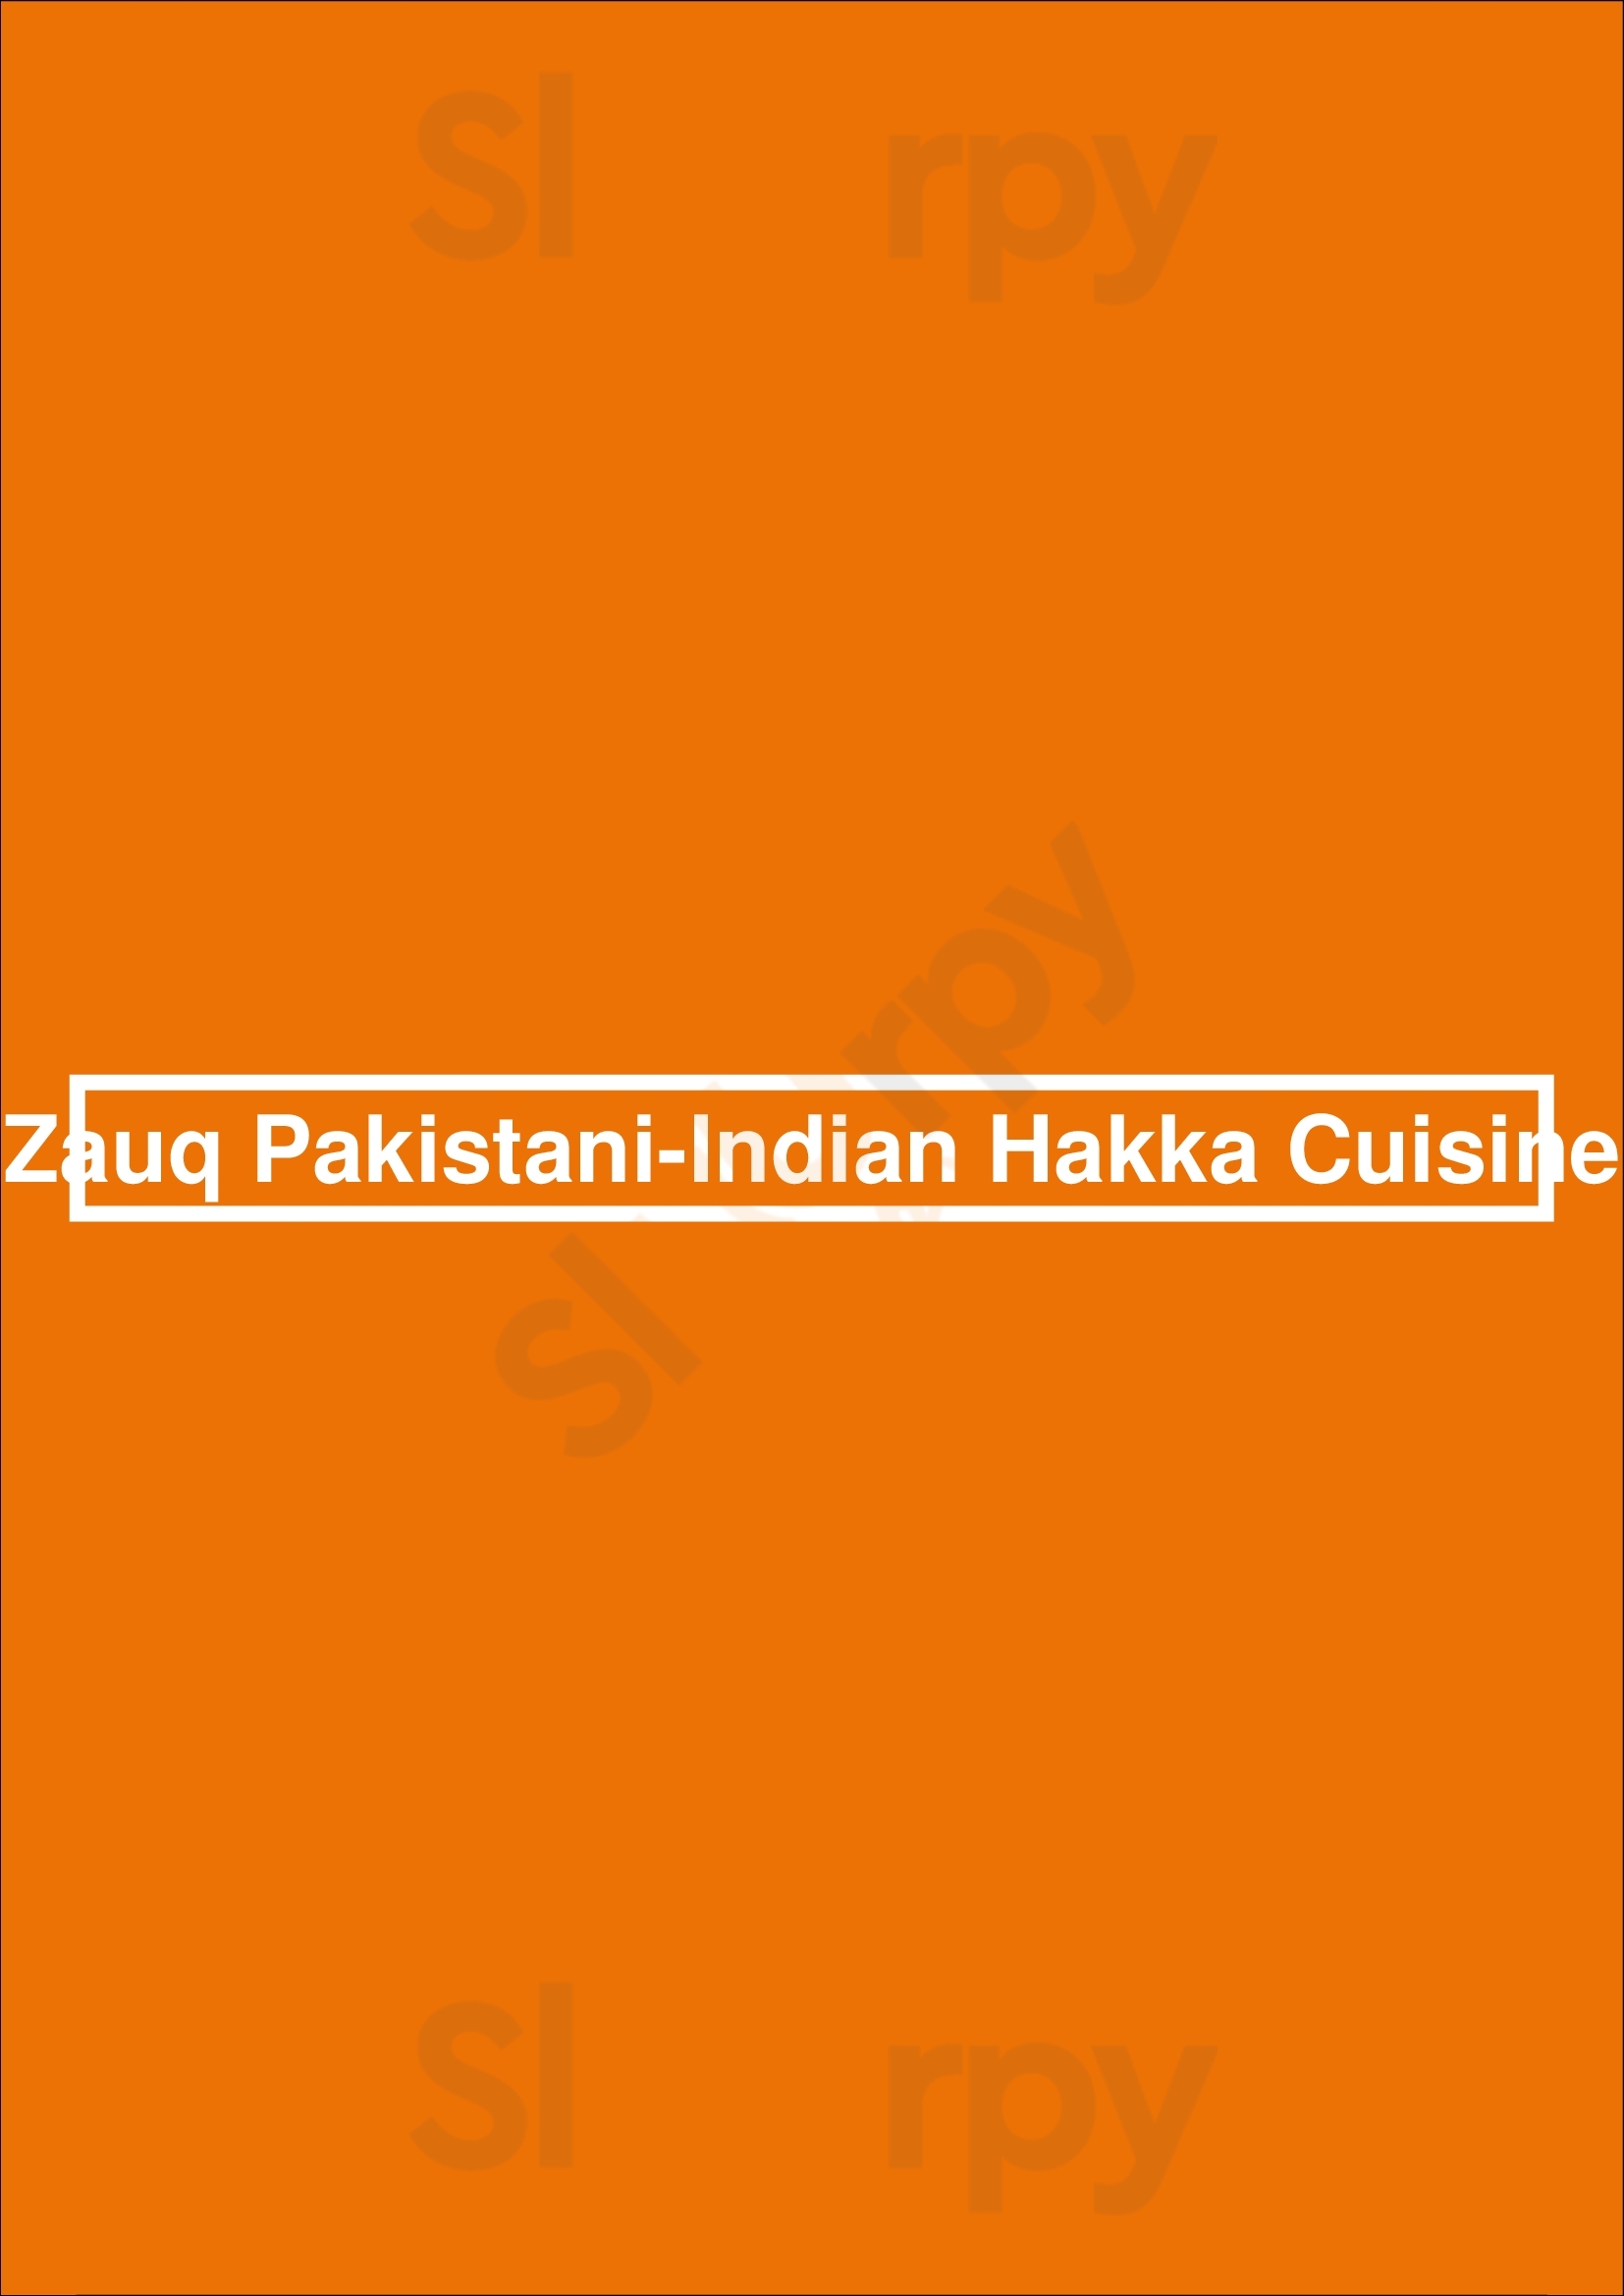 Zauq Pakistani-indian Hakka Cuisine Mississauga Menu - 1